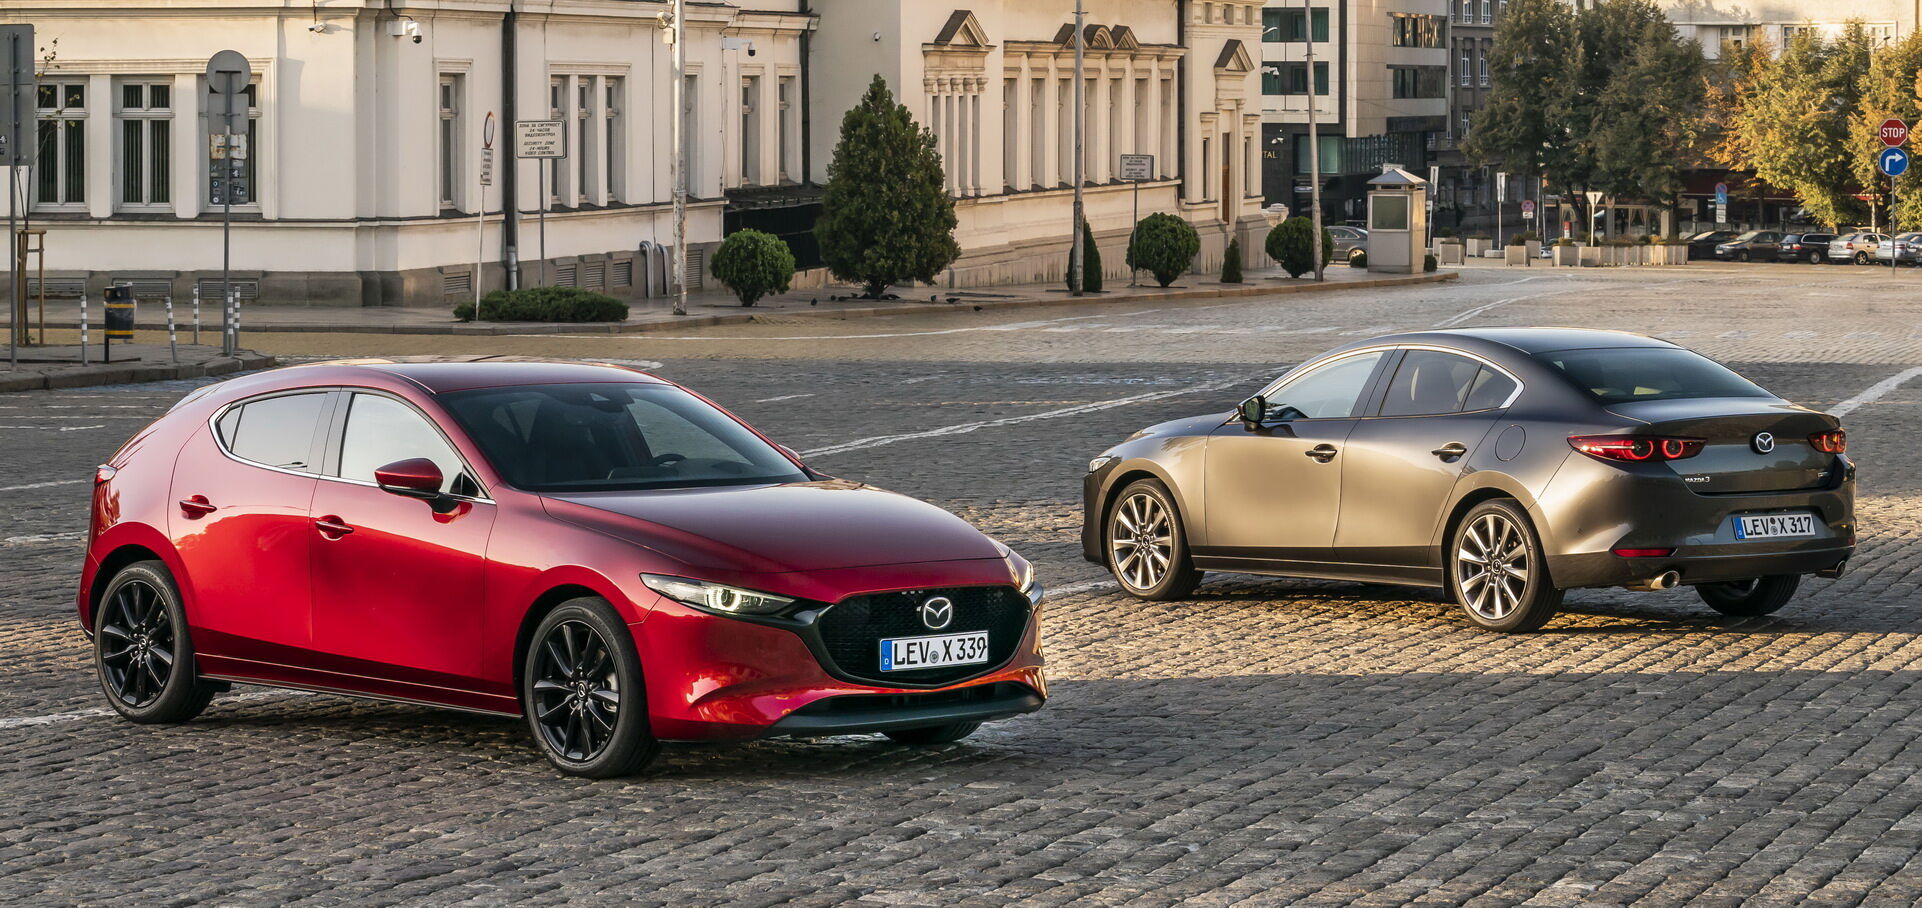 Mazda3 получила престижную награду WCOTY 2020 за дизайн